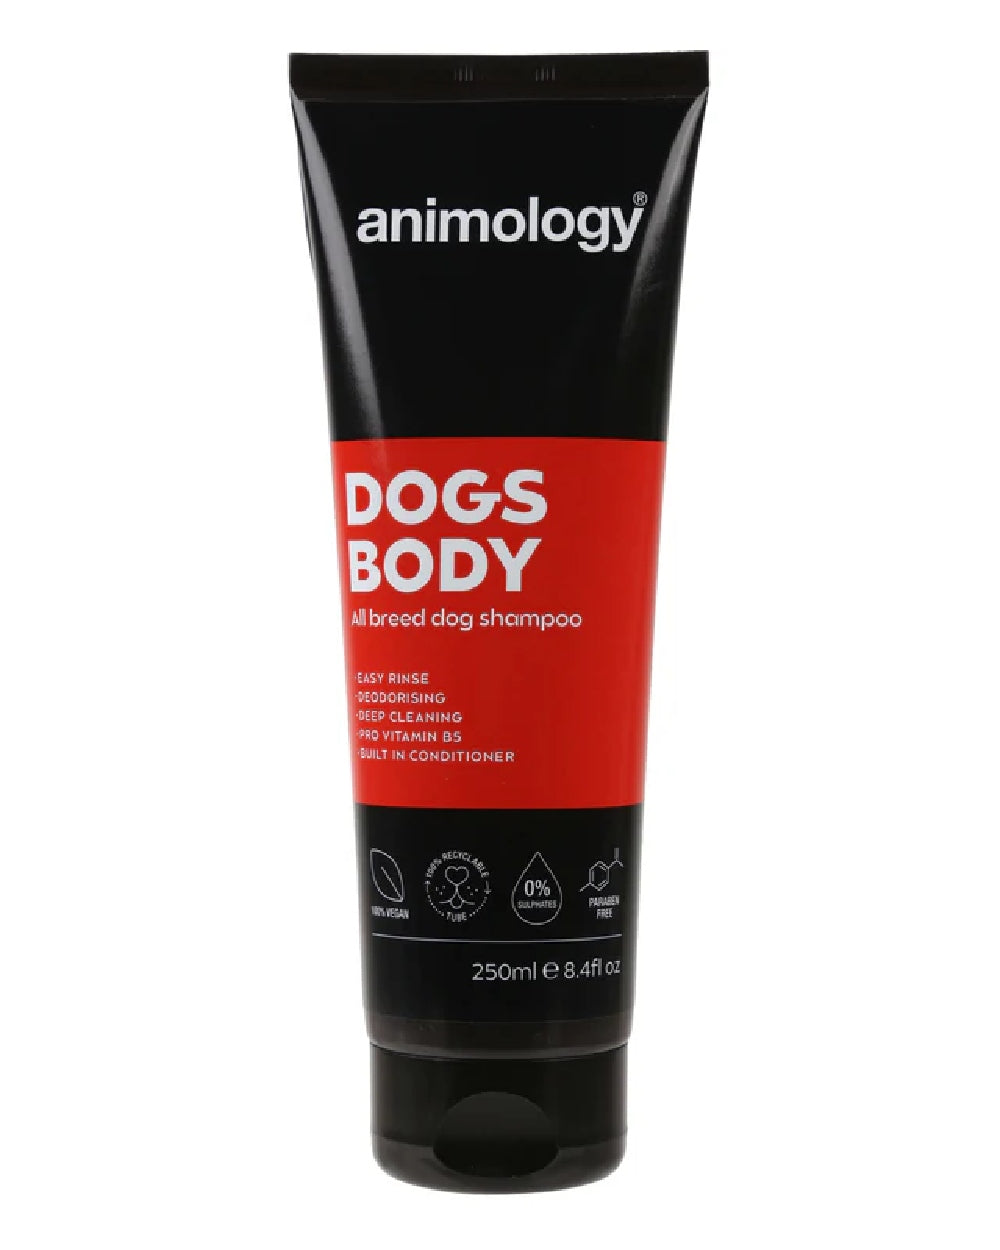 Animology Dogs Body Shampoo 250ml on white background